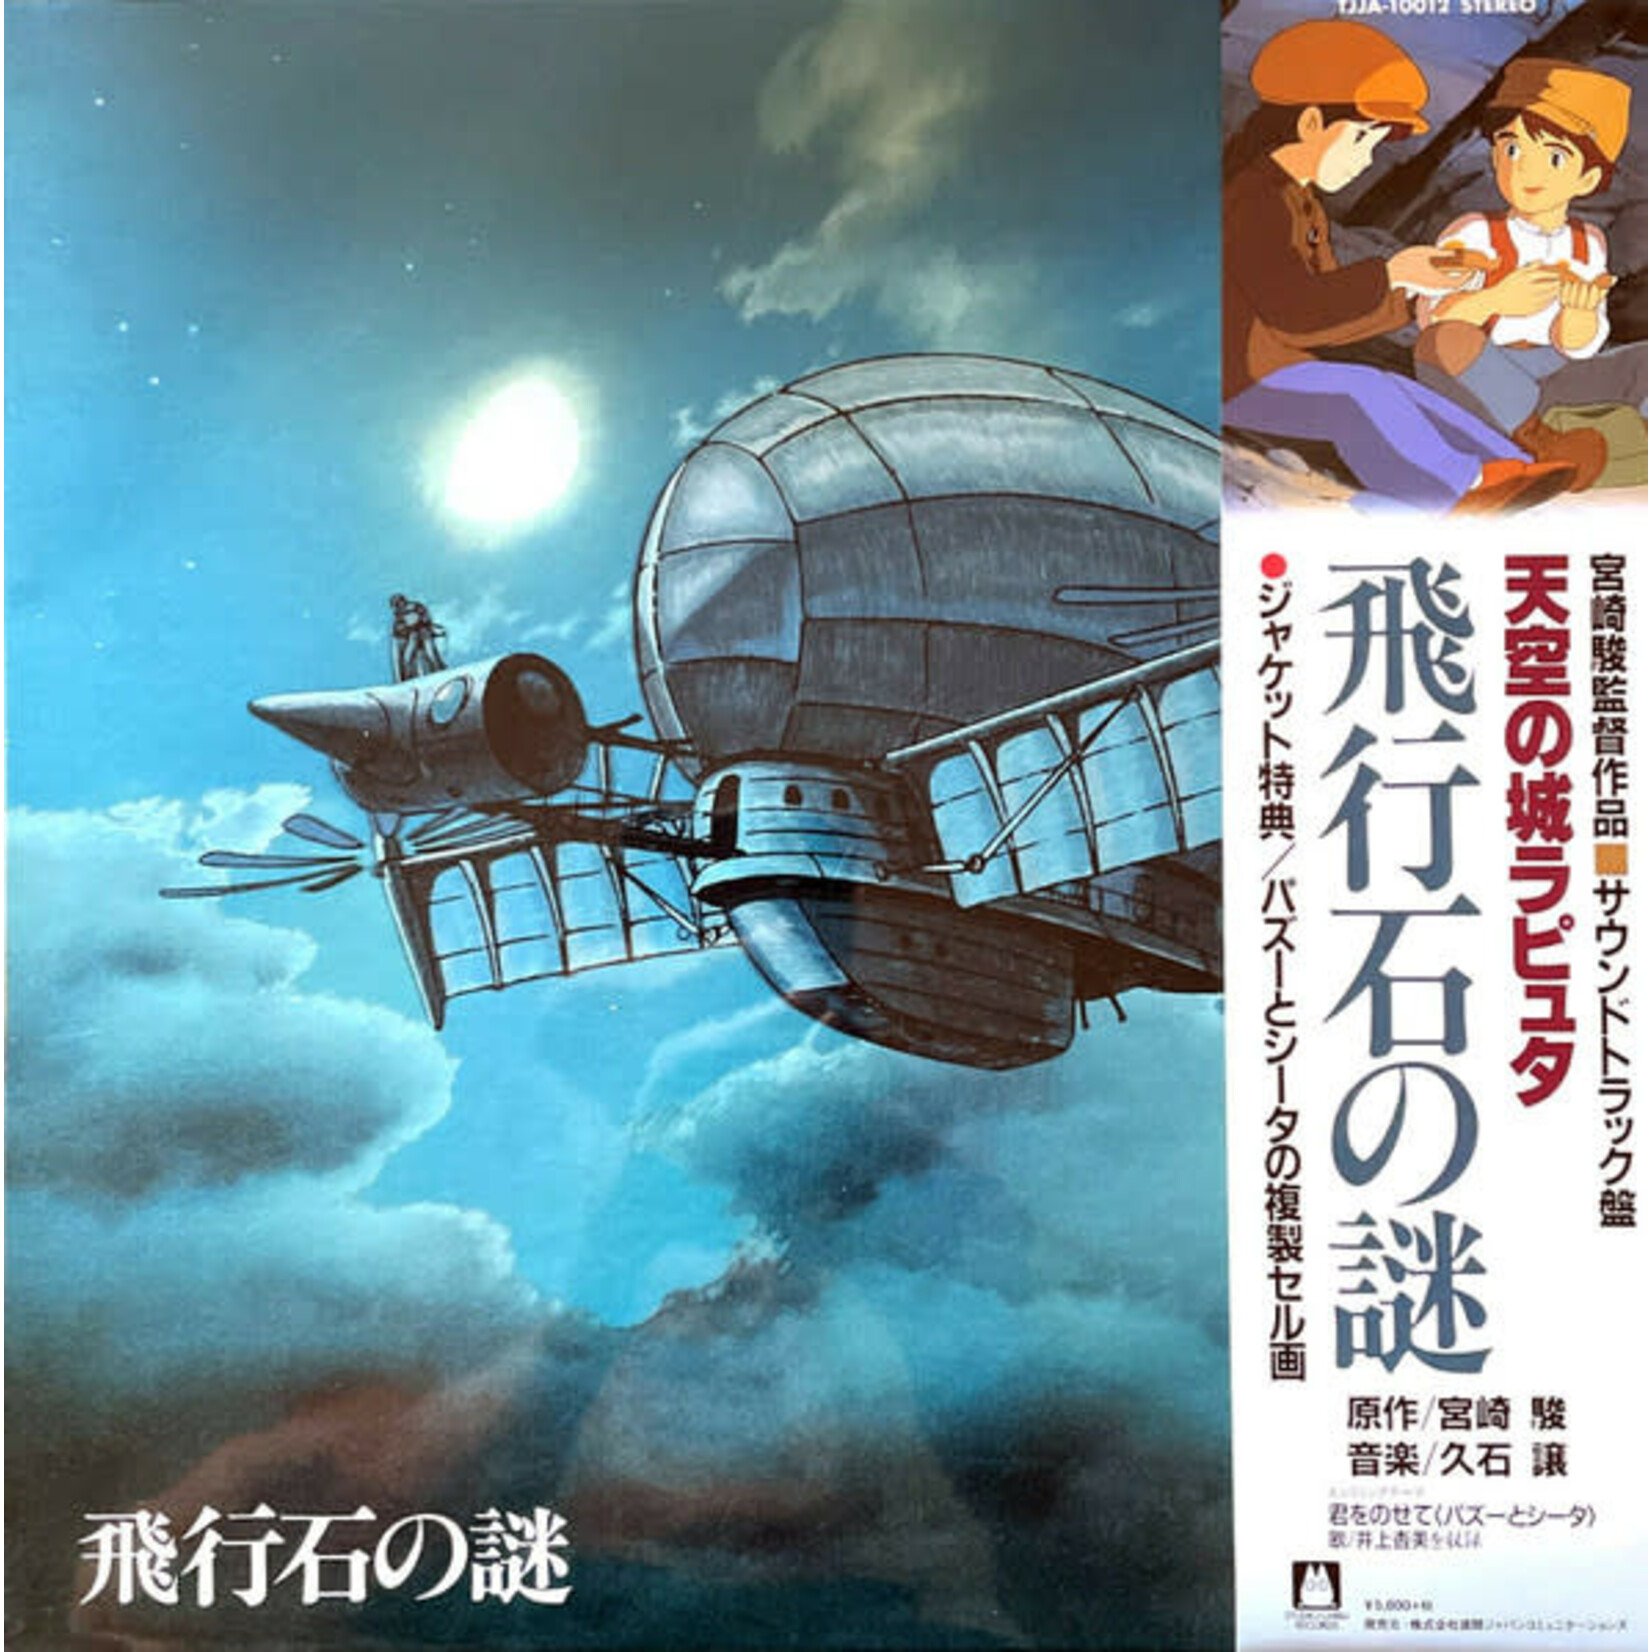 Studio Ghibli Joe Hisaishi - Castle In The Sky OST (LP)